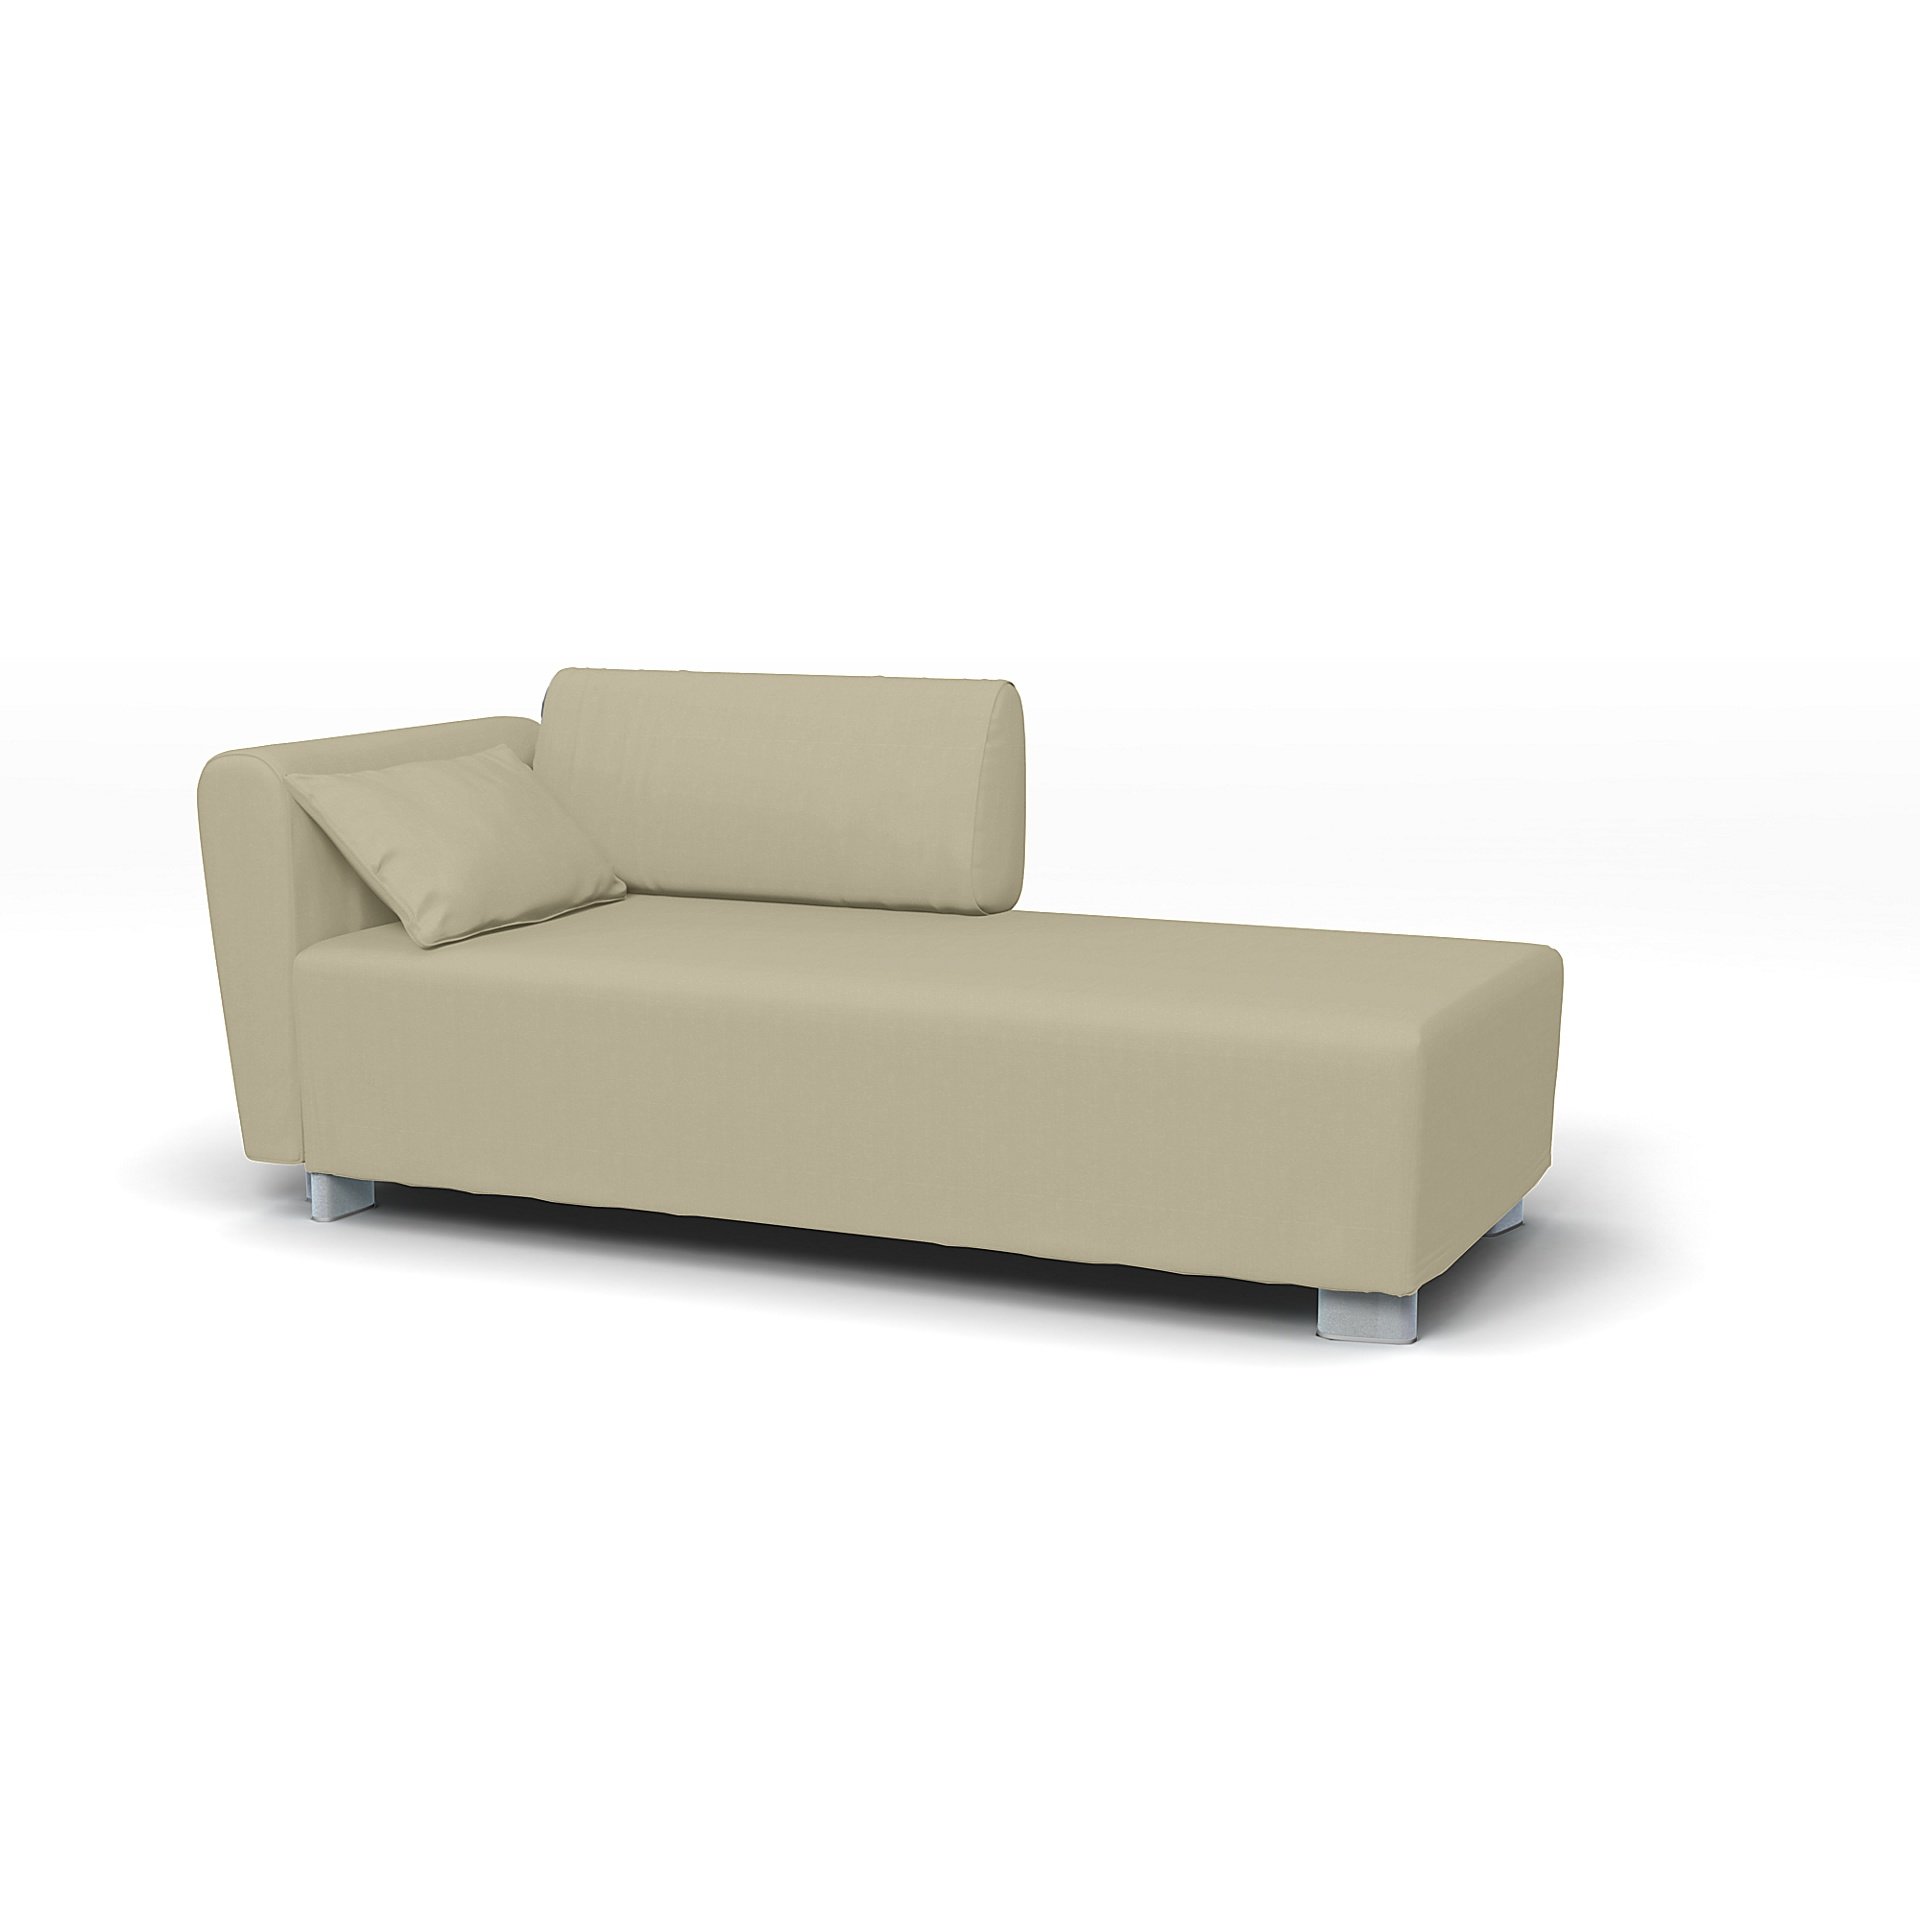 IKEA - Mysinge Chaise Longue with Armrest Cover, Sand Beige, Cotton - Bemz